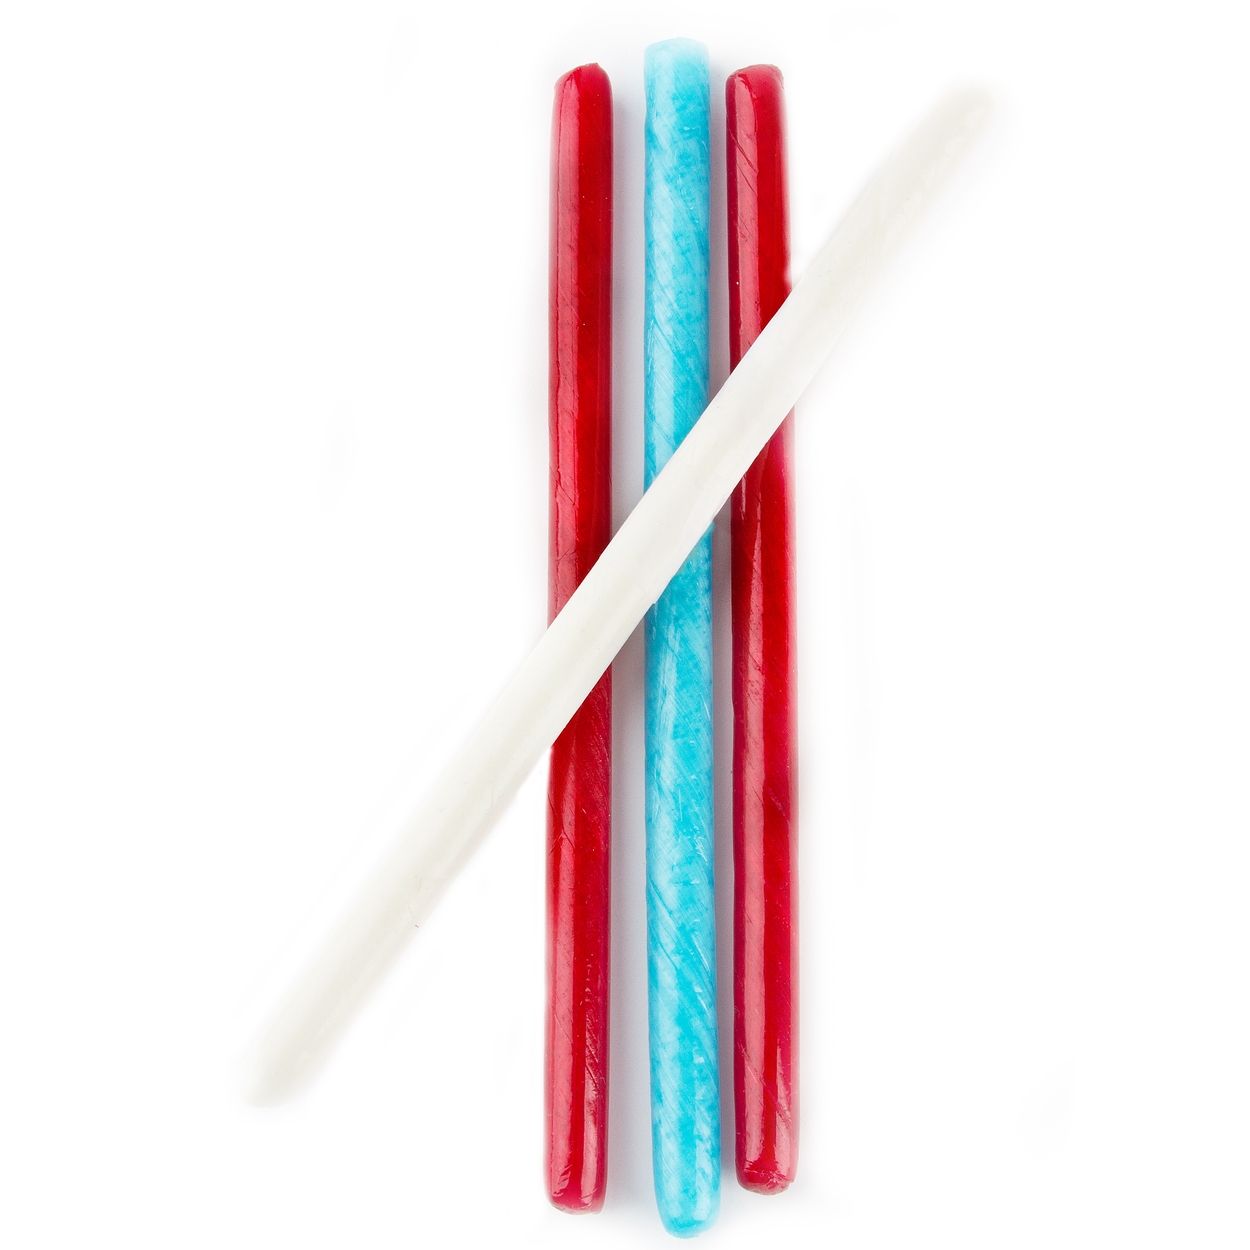 All American Candy Sticks1 